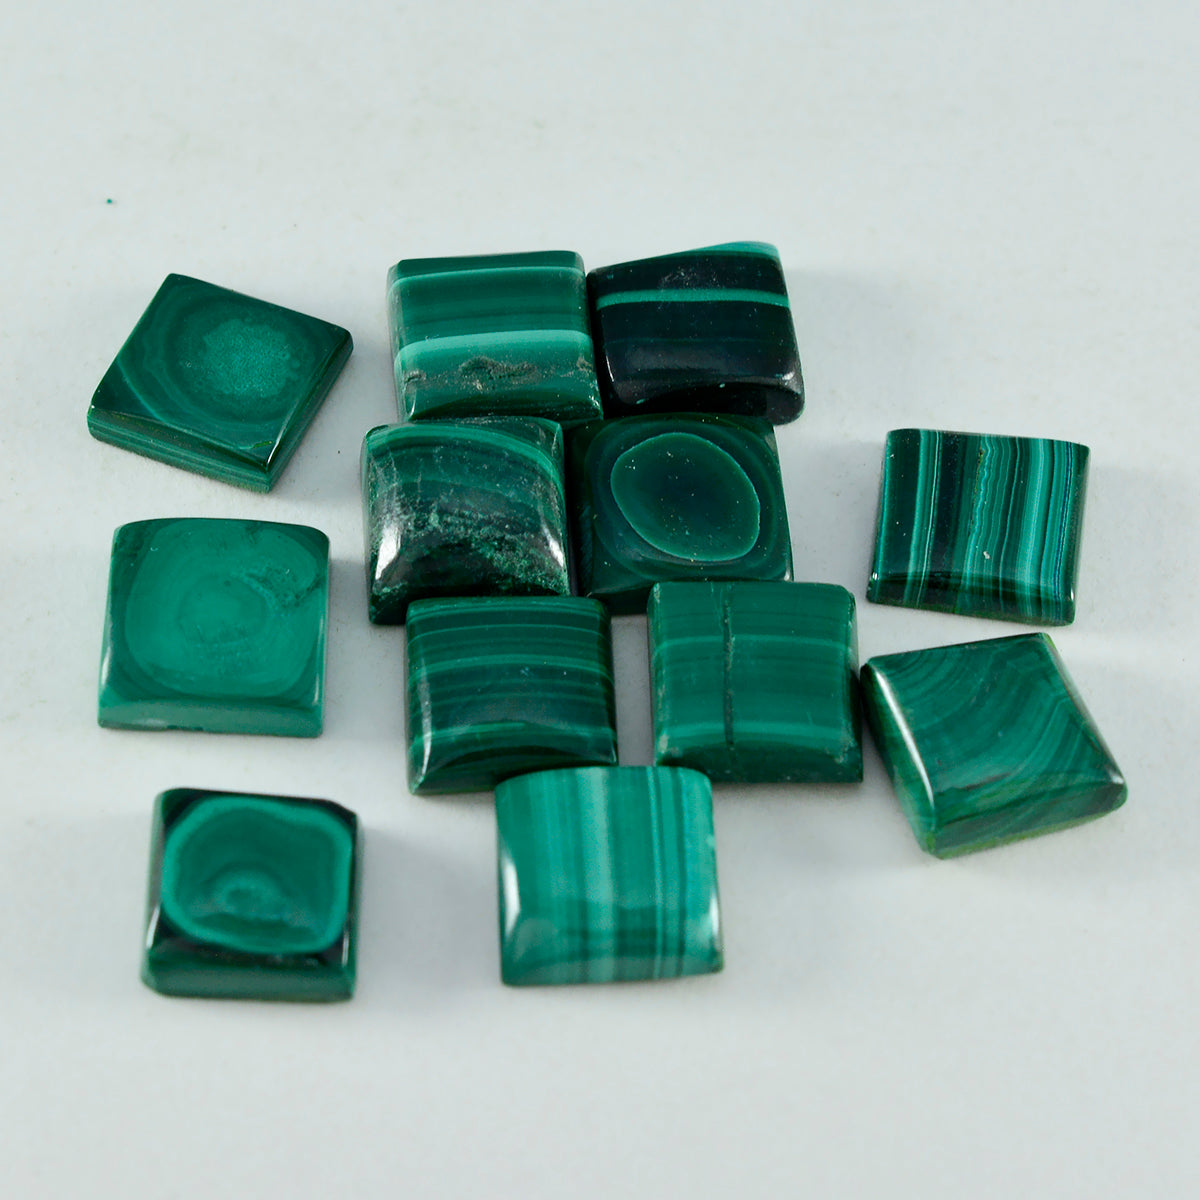 riyogems 1pc グリーン マラカイト カボション 8x8 mm 正方形のかわいい品質の石